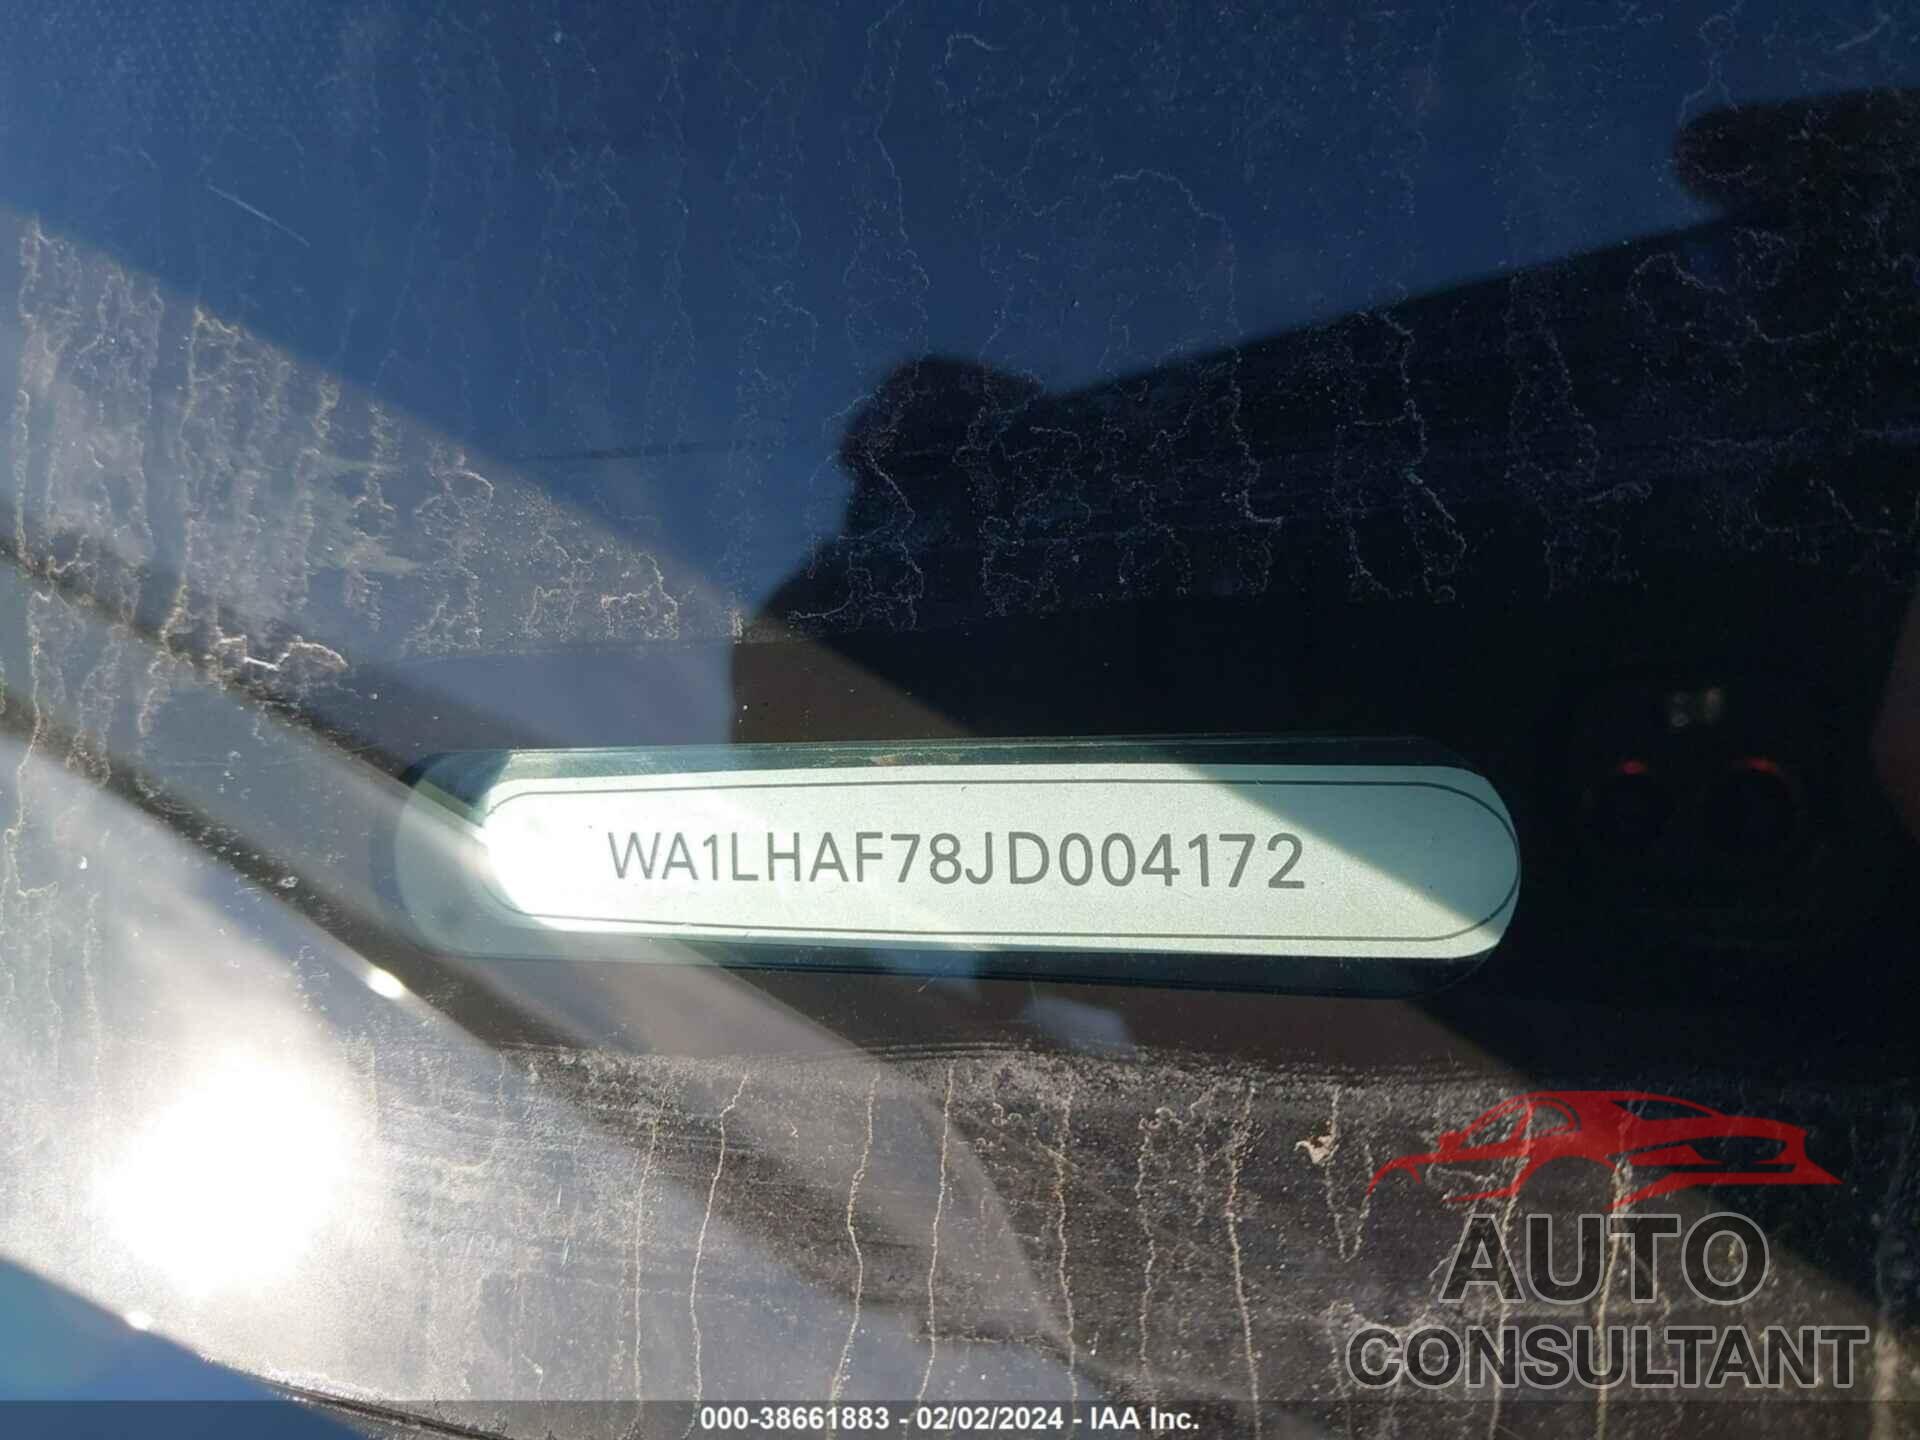 AUDI Q7 2018 - WA1LHAF78JD004172